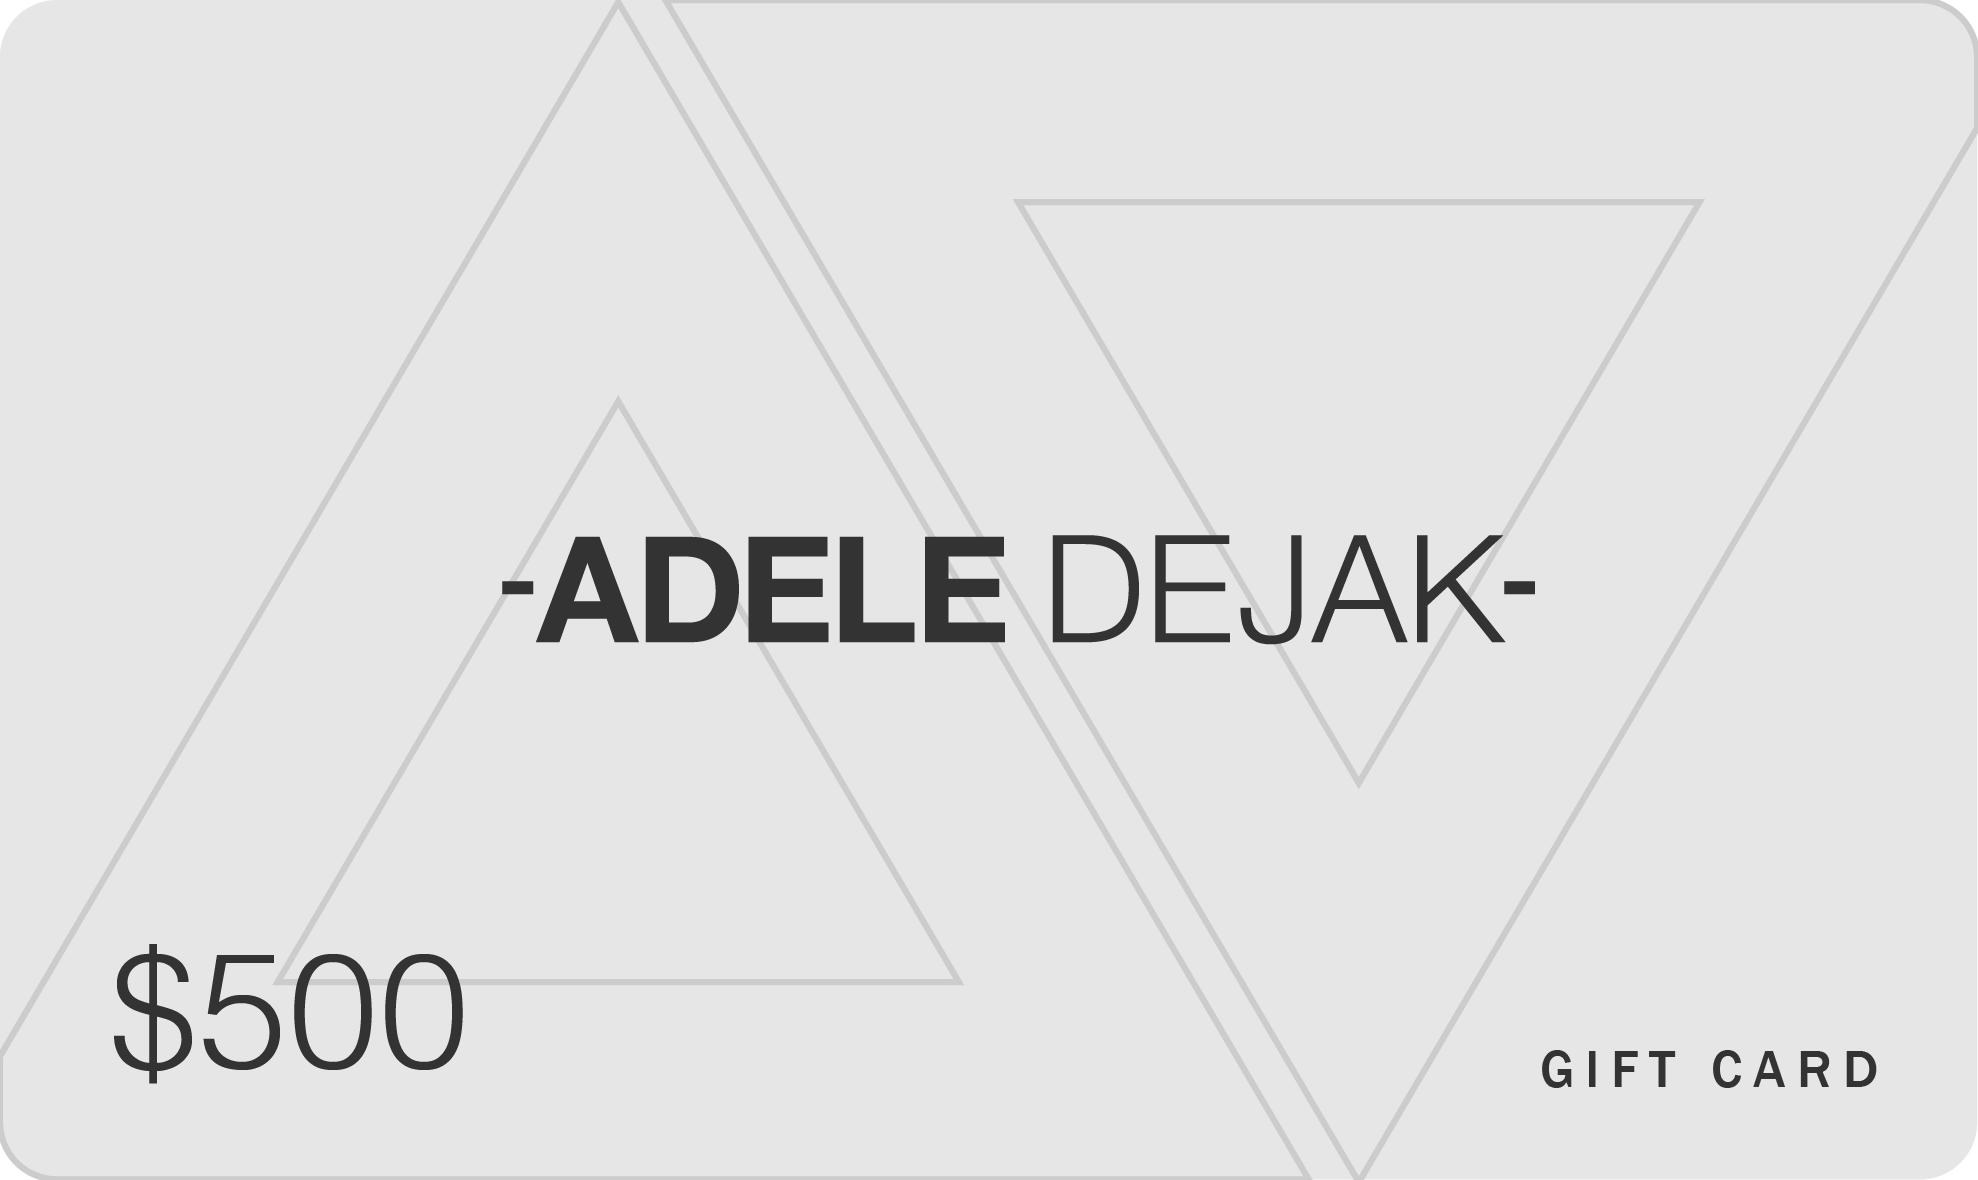 Adele Dejak Gift Card